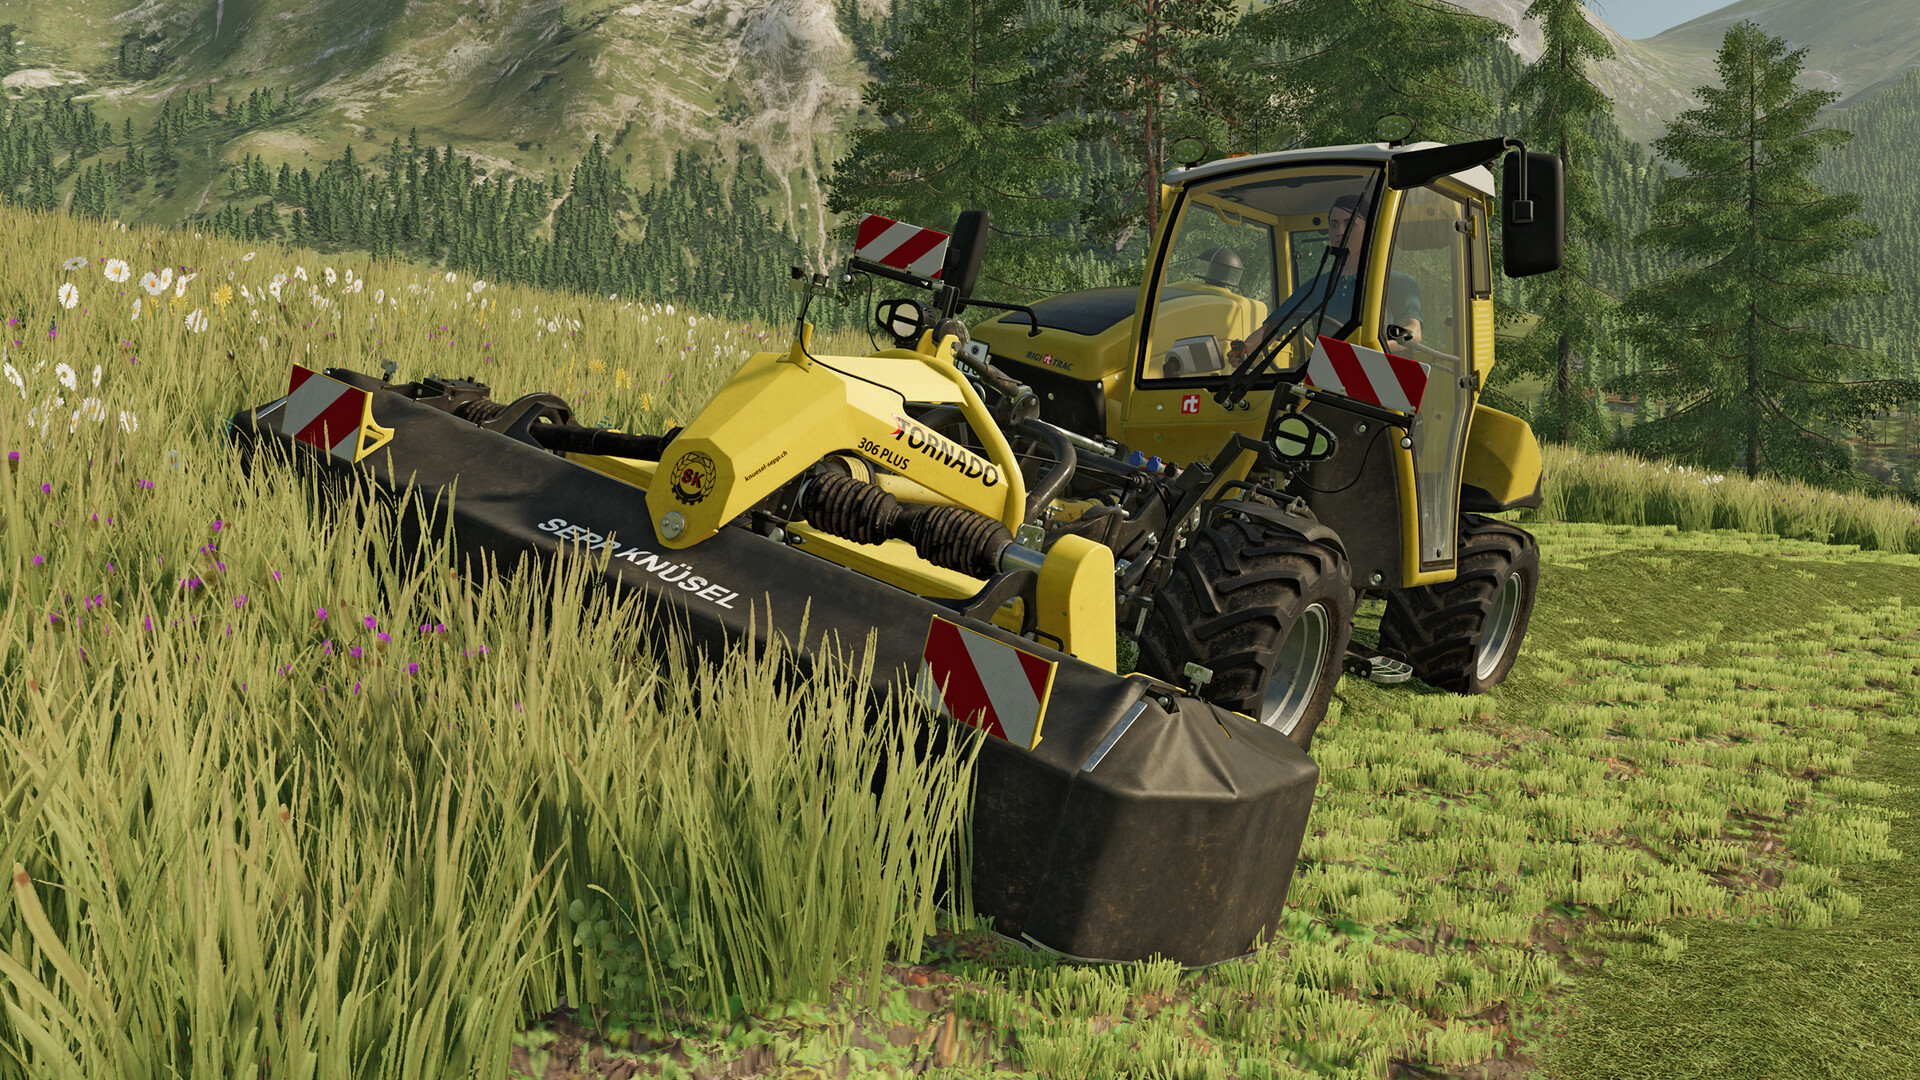 Farming Simulator 22 - Hay & Forage Pack DLC Steam CD Key